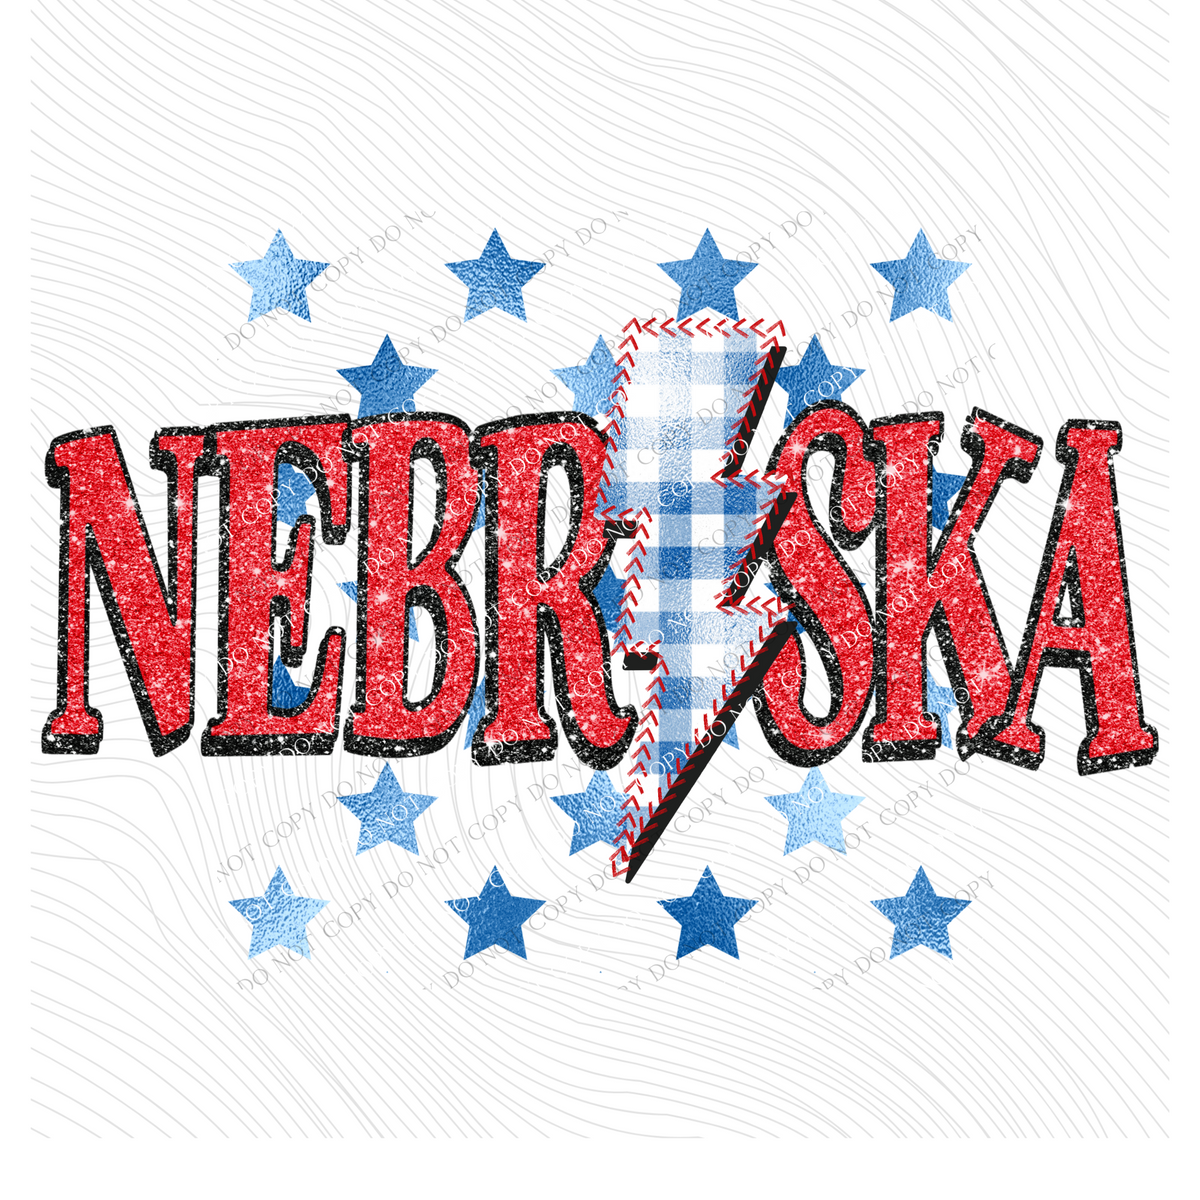 Nebraska Glitter with Foil Stars & Gingham Stitched Bolt in Red, White & Blue Patriotic Digital Design, PNG